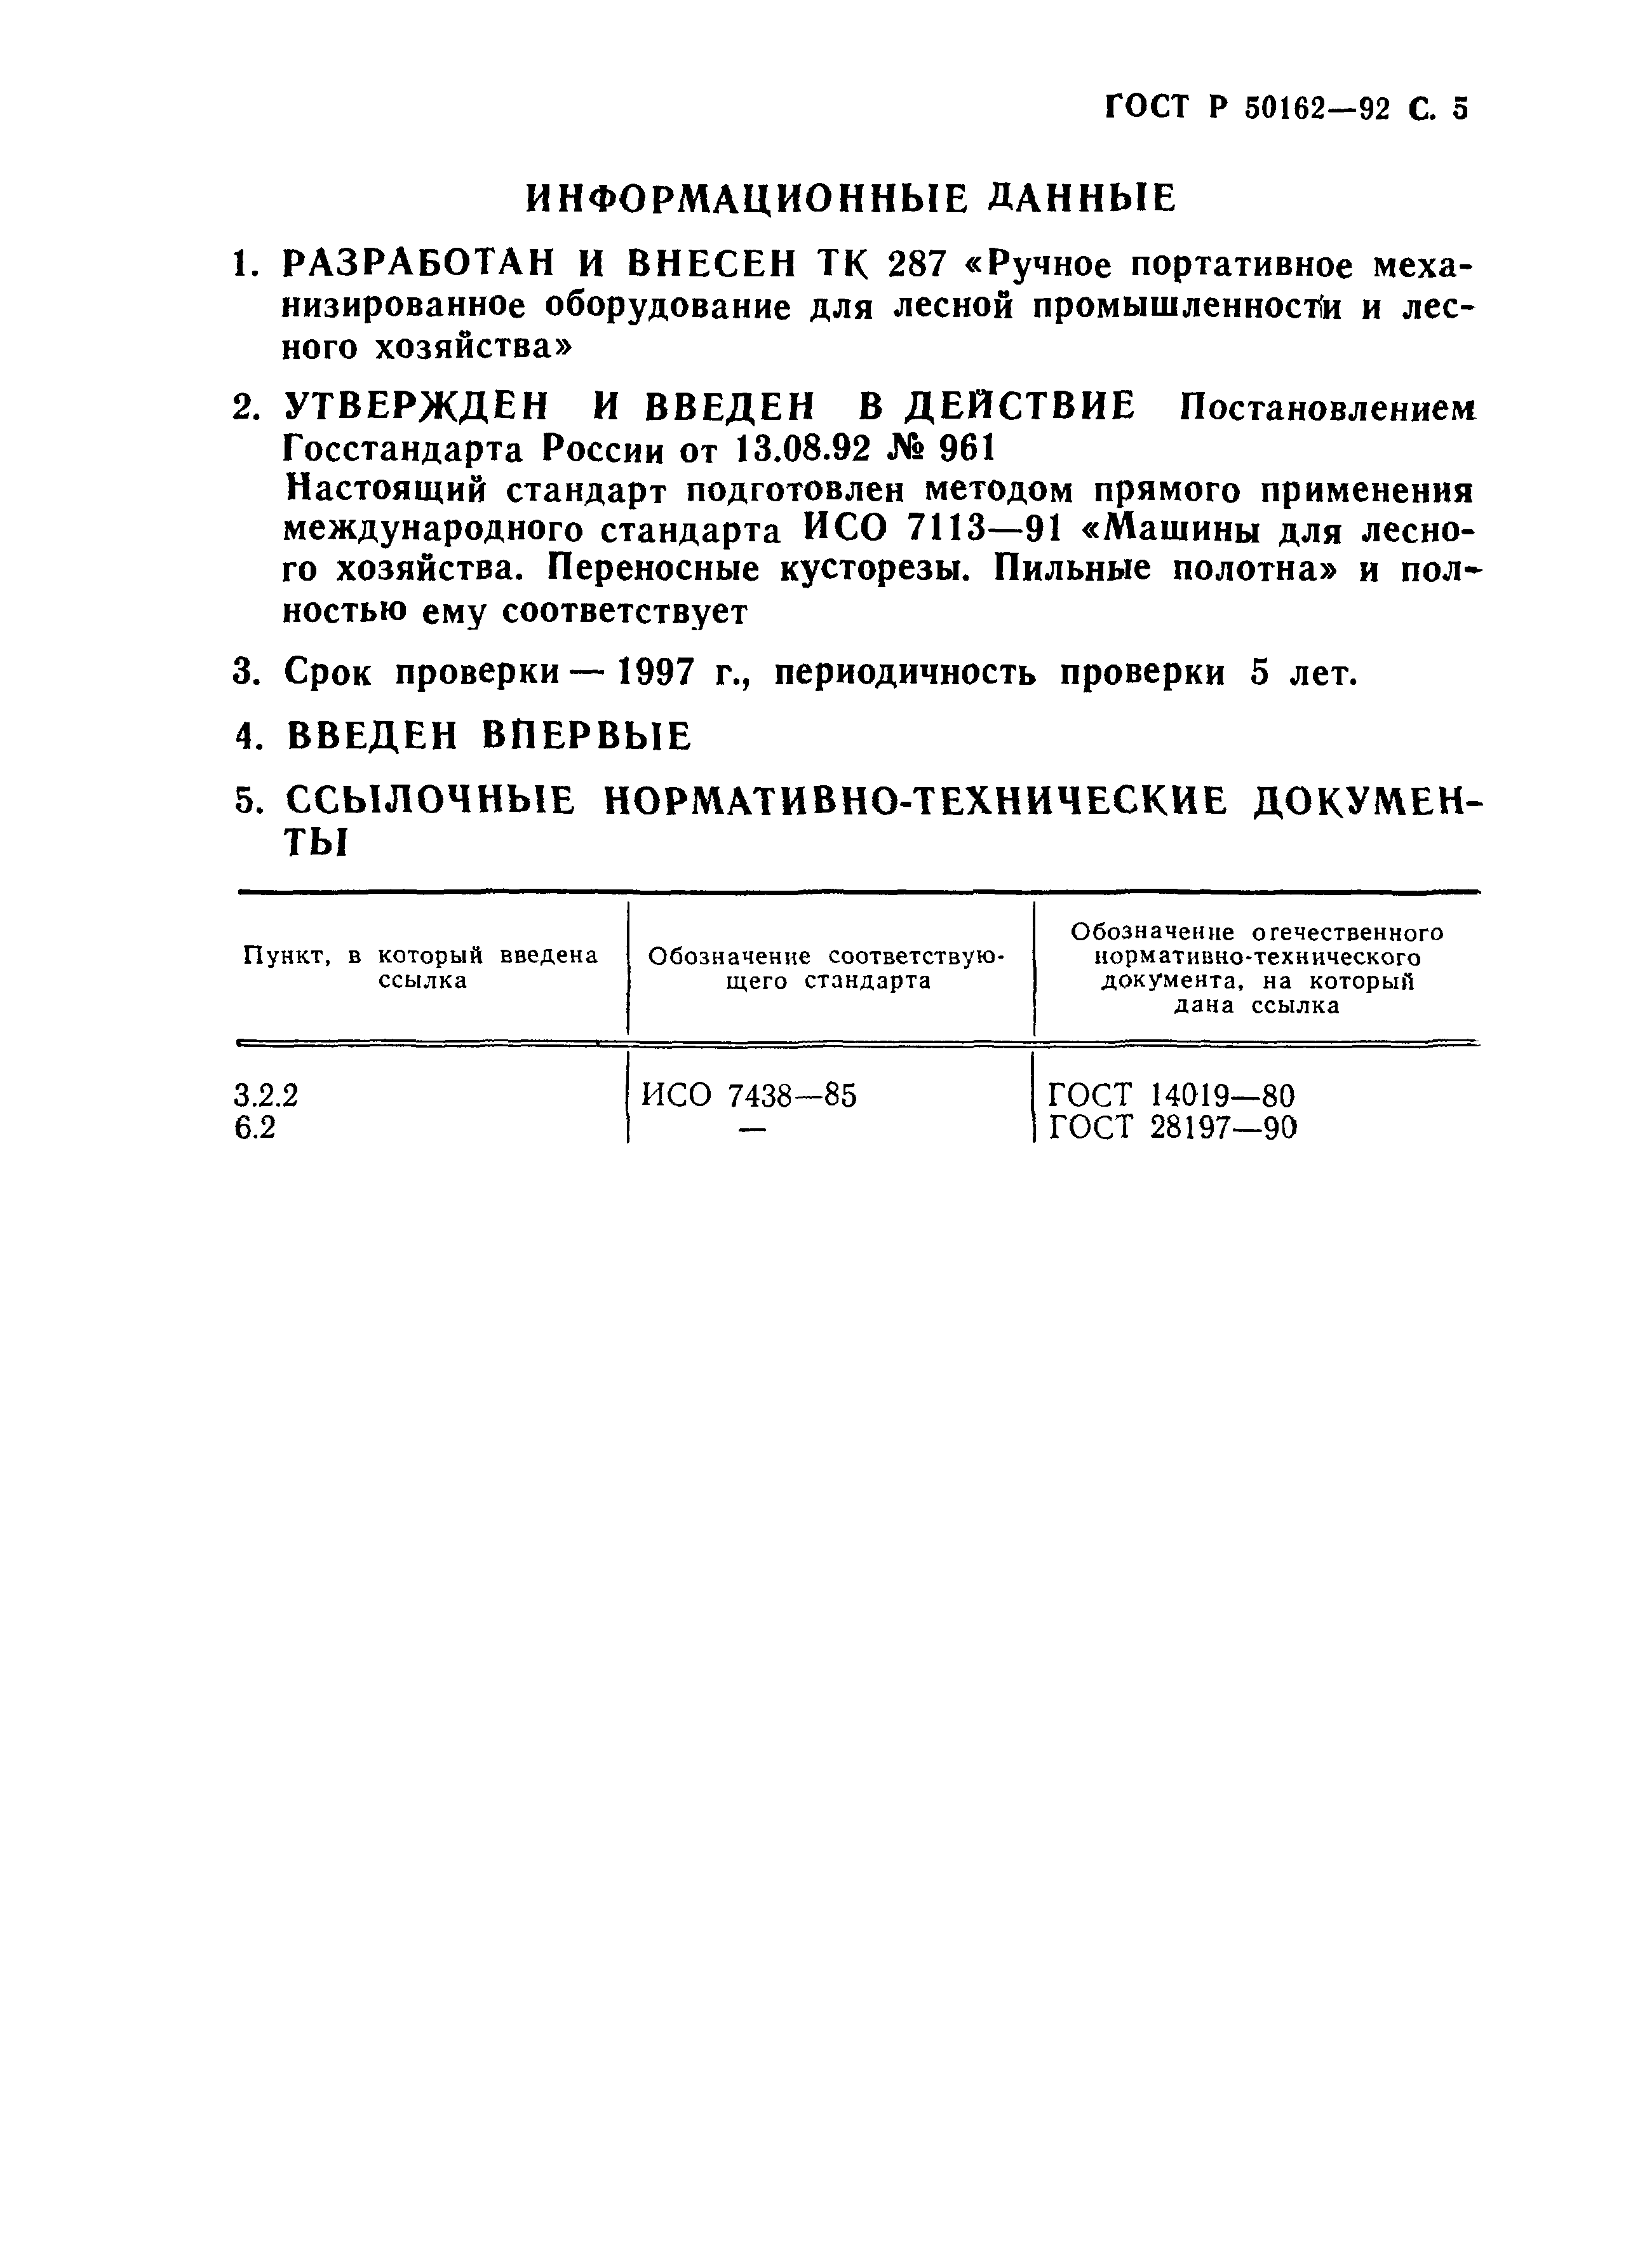 ГОСТ Р 50162-92